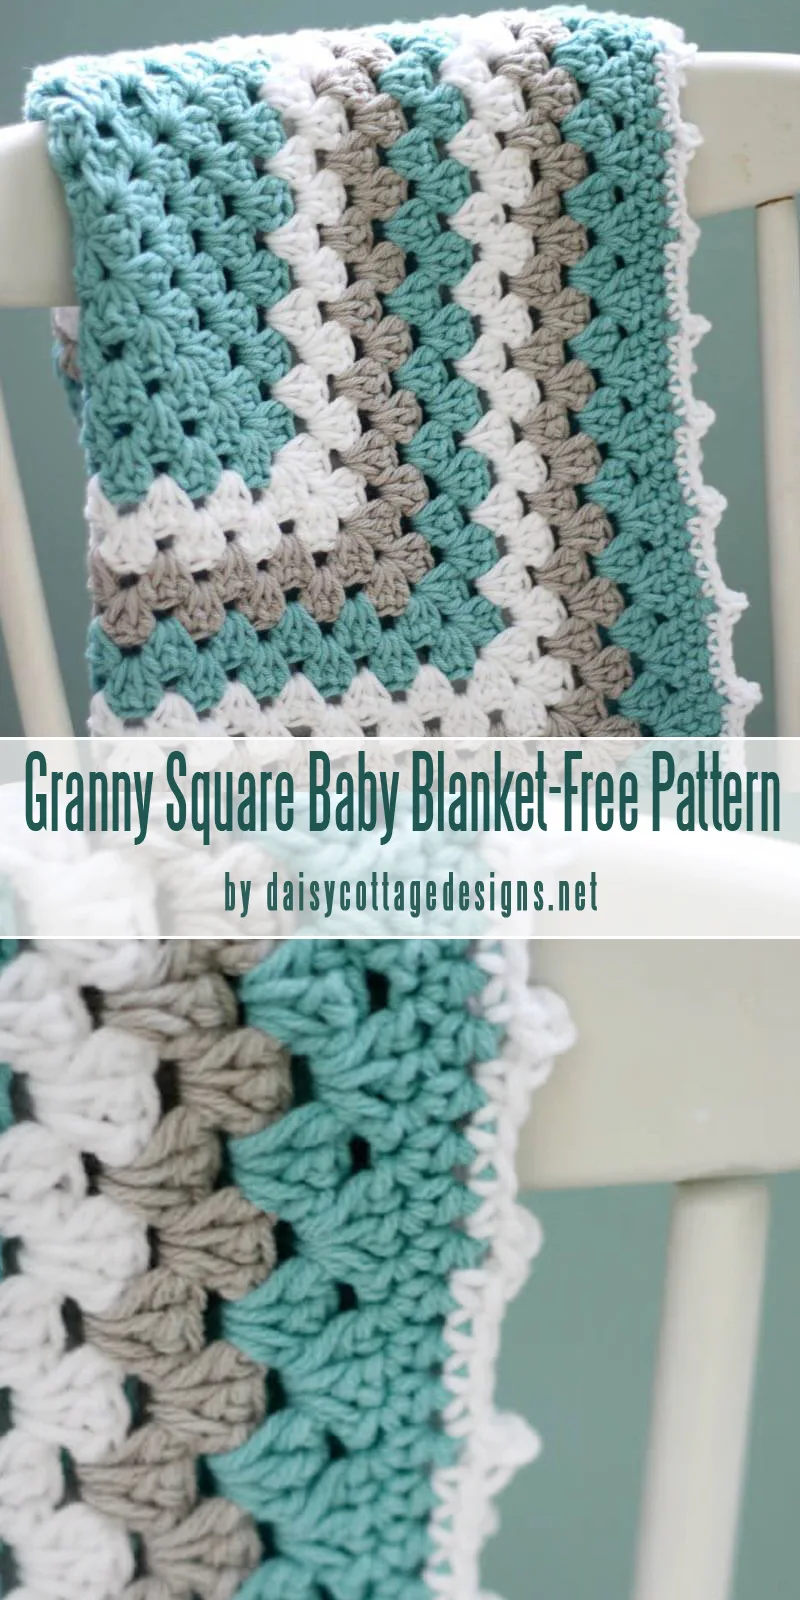 Free Crochet Patterns (Granny Square Baby Blanket)